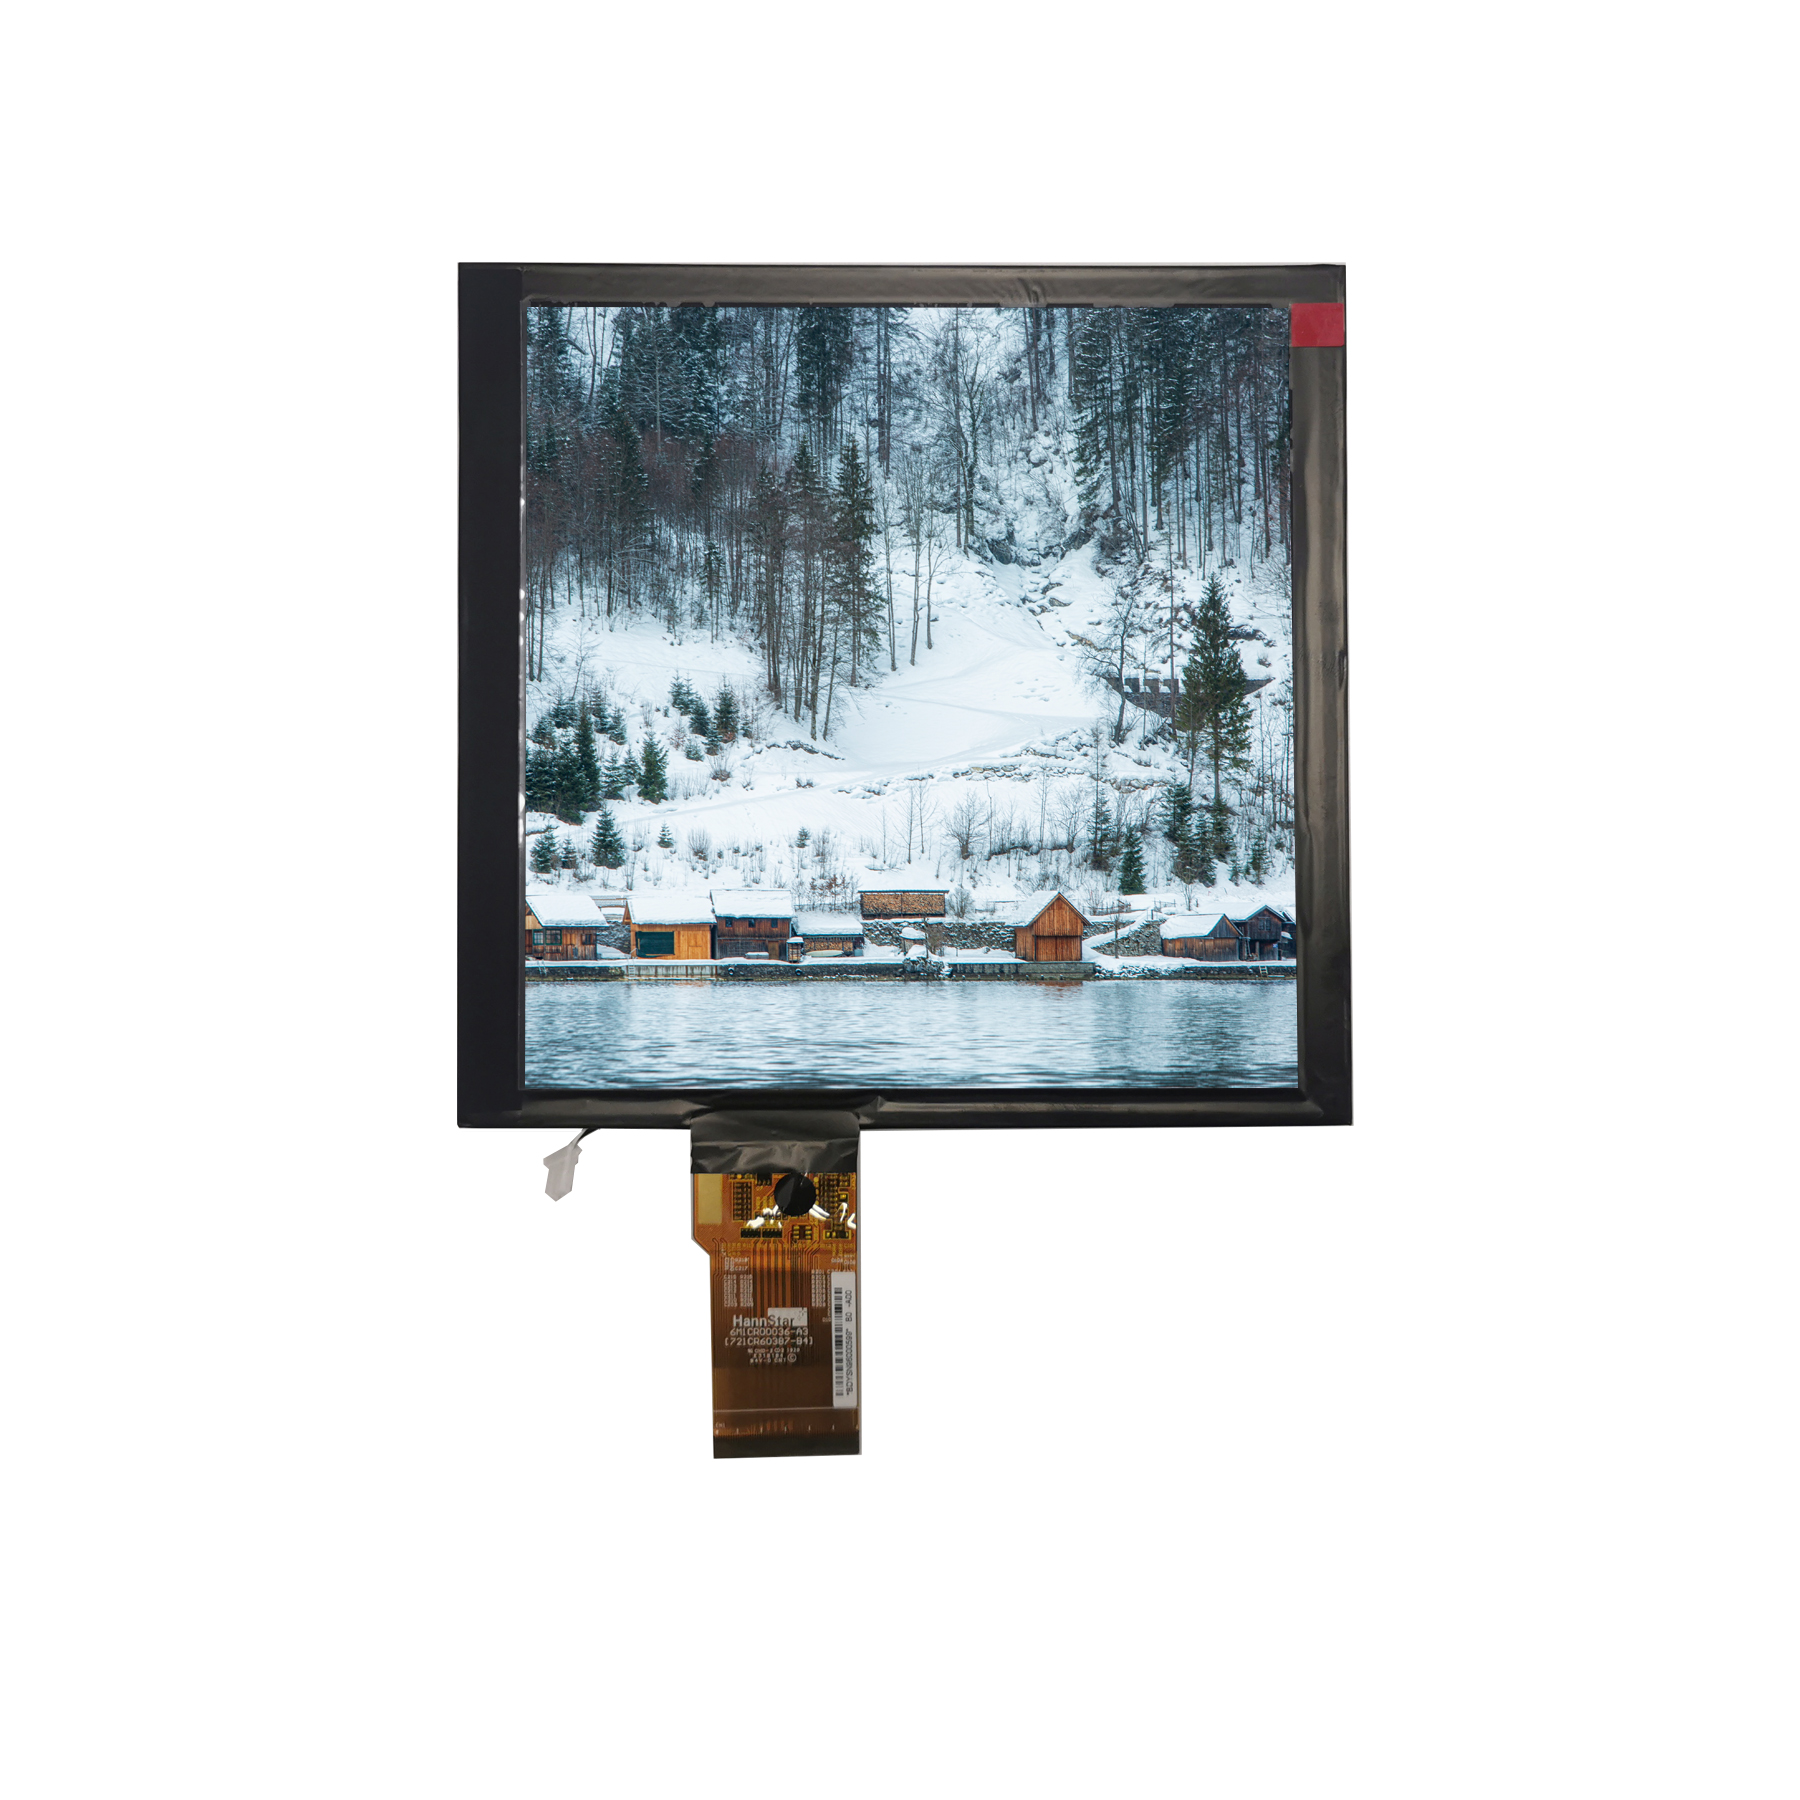 8.82" LVDS Square TFT LCD Display(768x768)